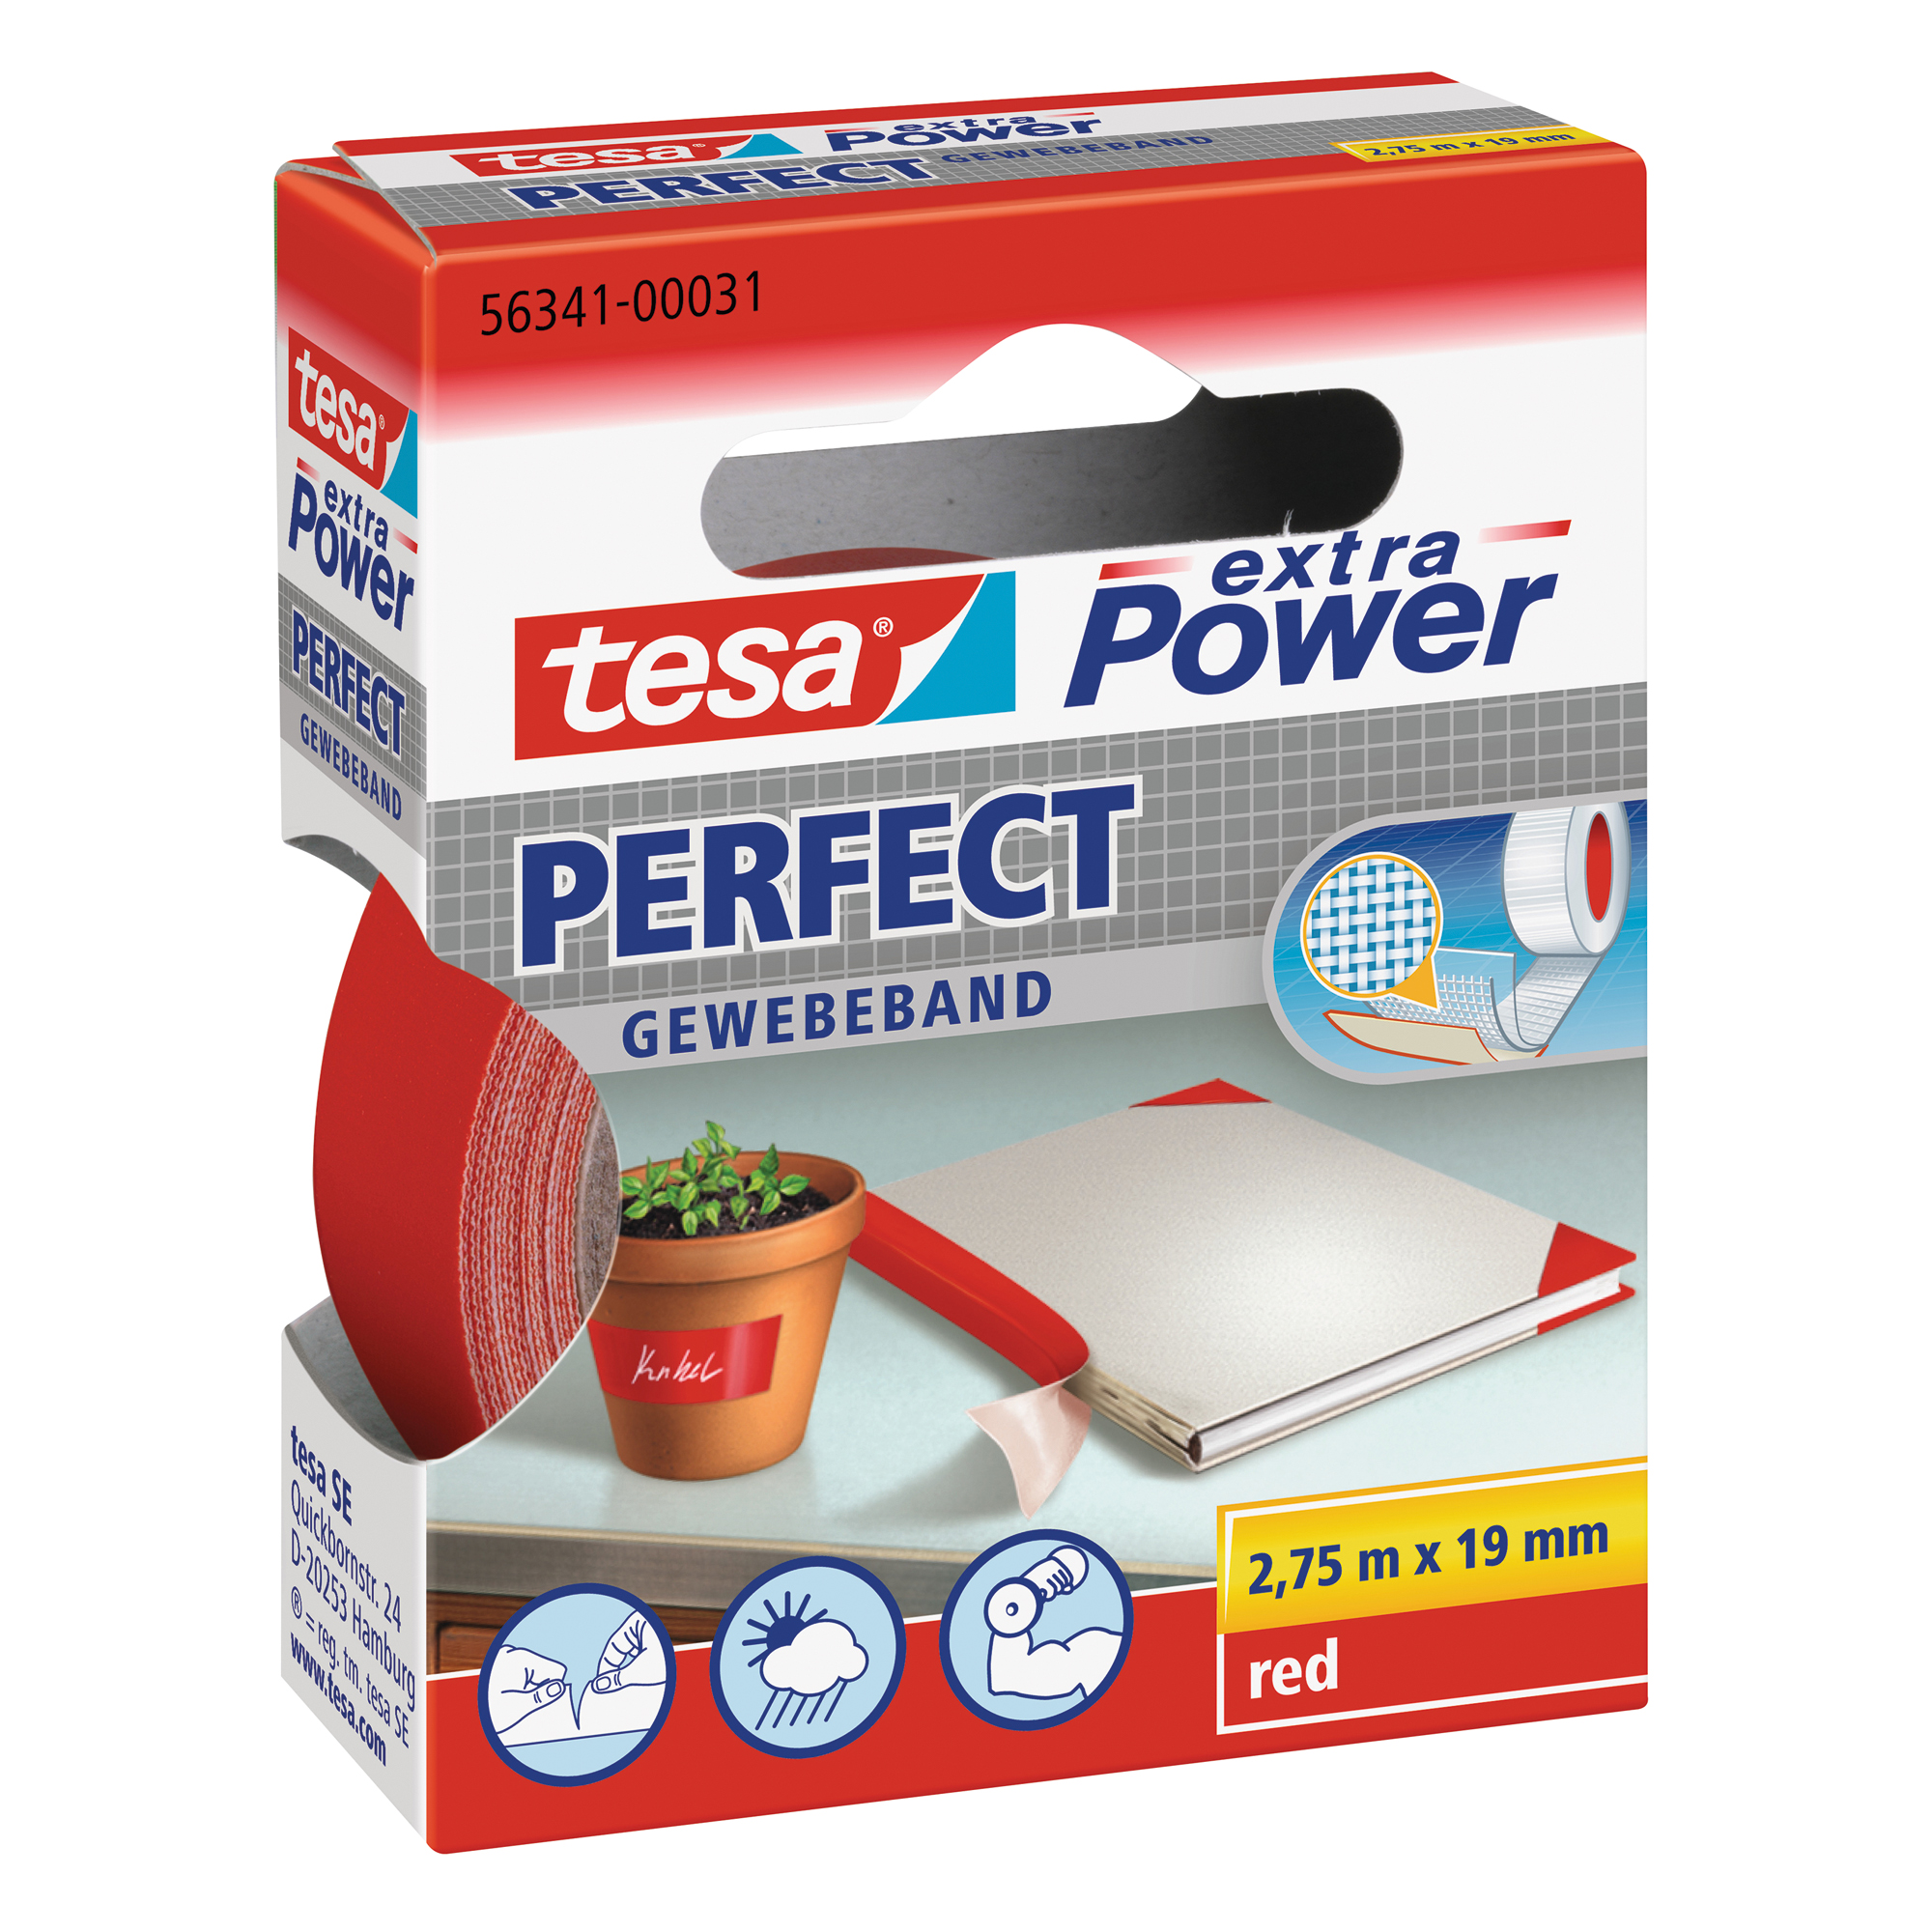 tesa® Gewebeband extra Power® Perfect 19 mm rot